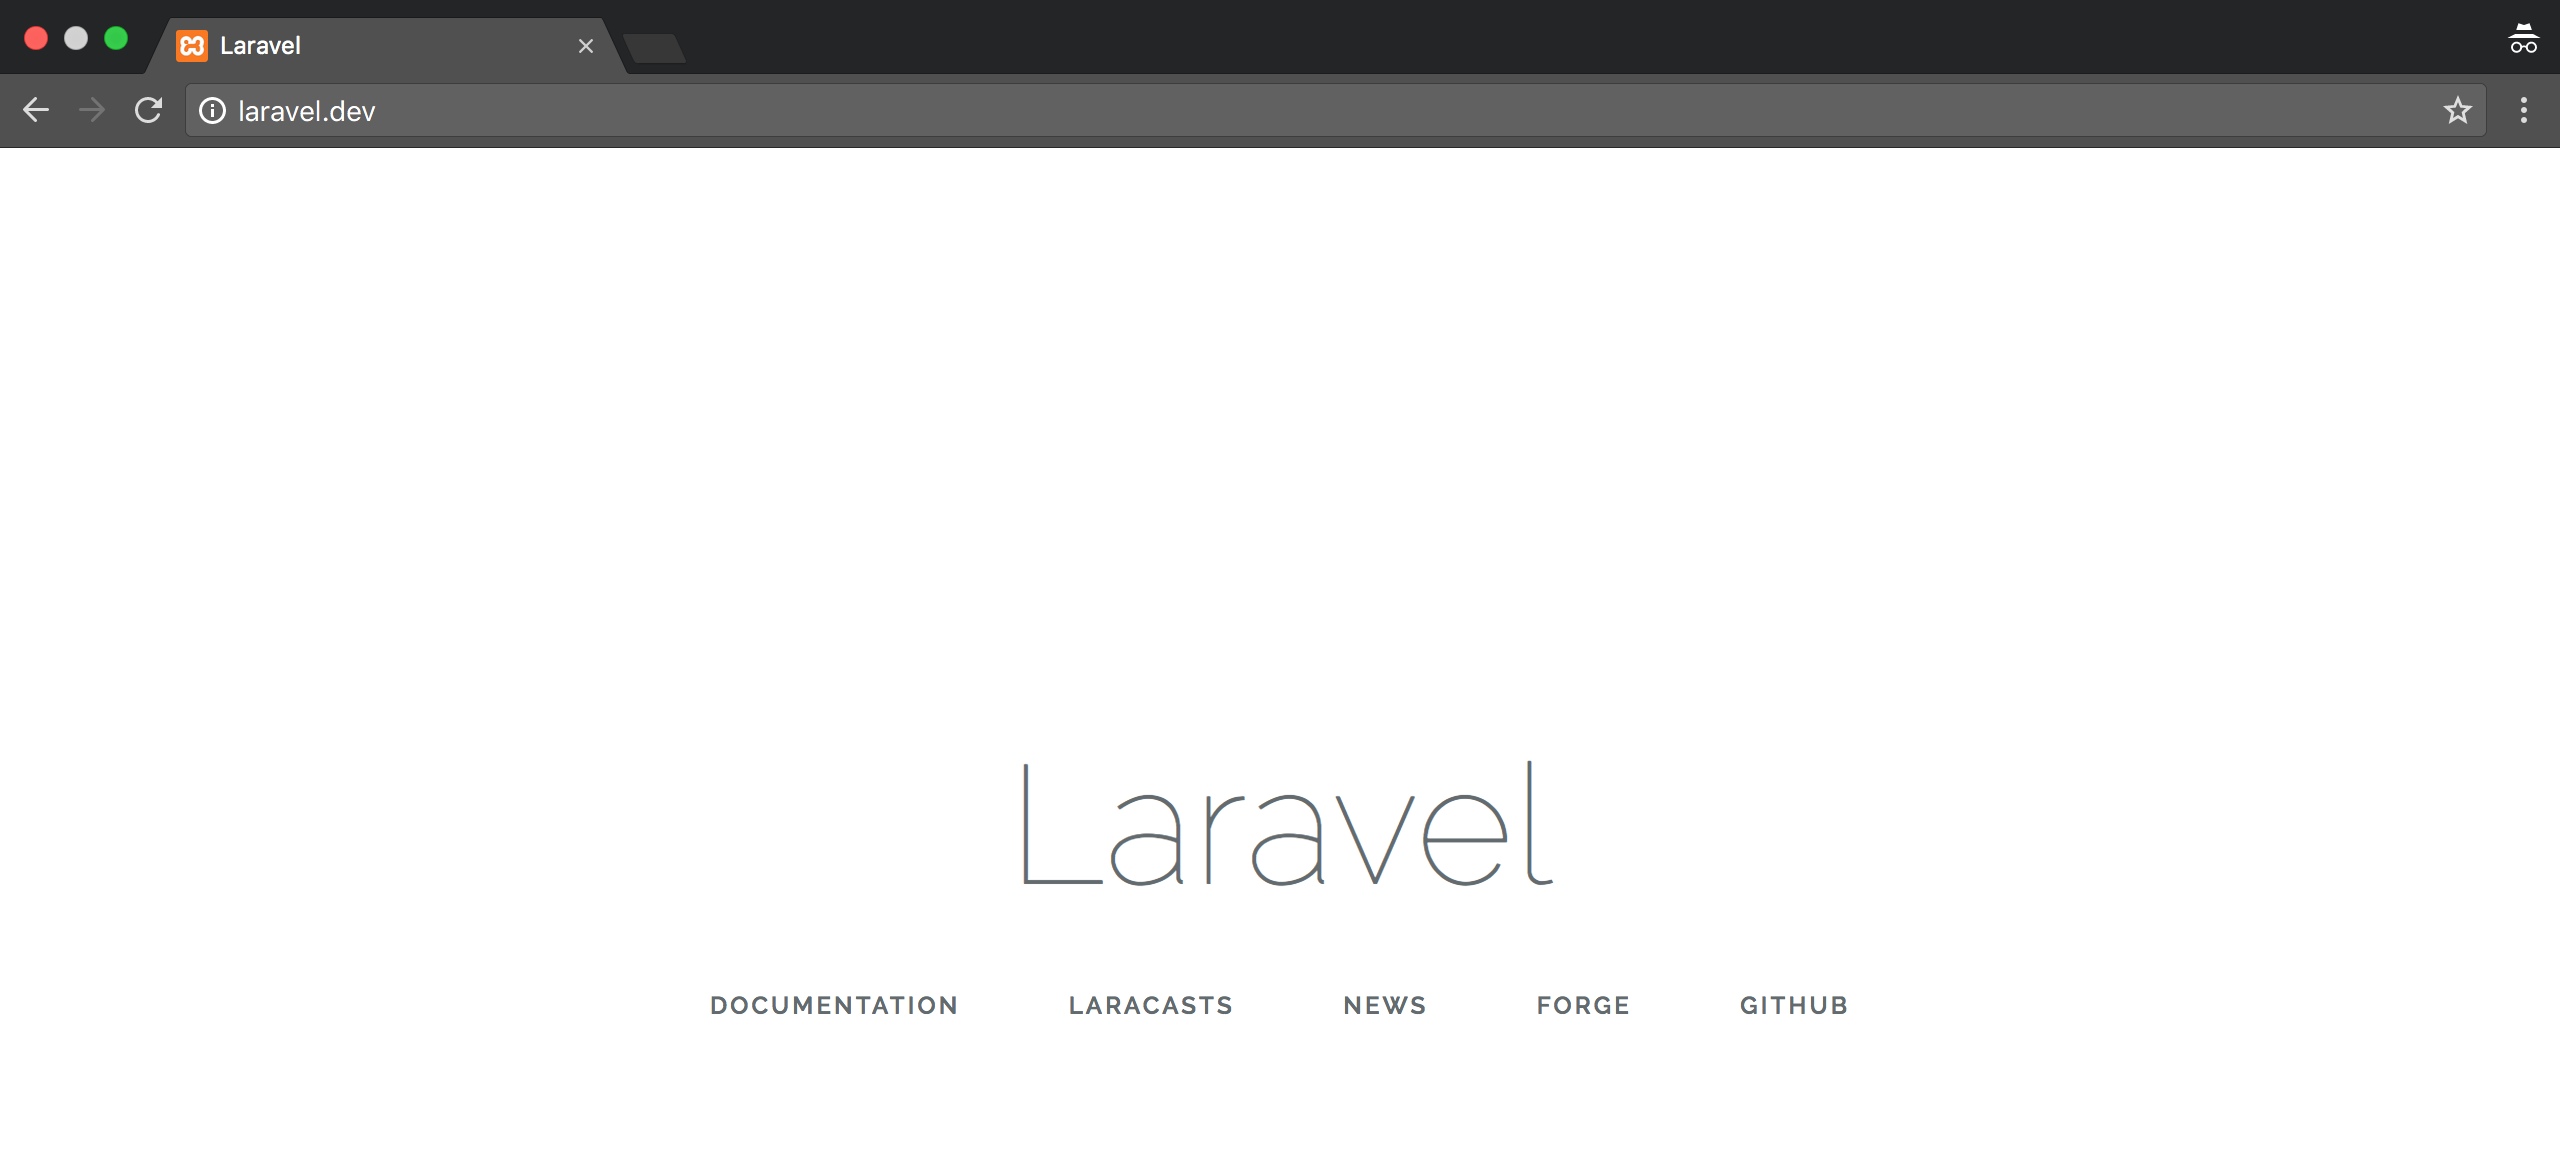 How to Install Laravel 5.7 with XAMPP on Mac